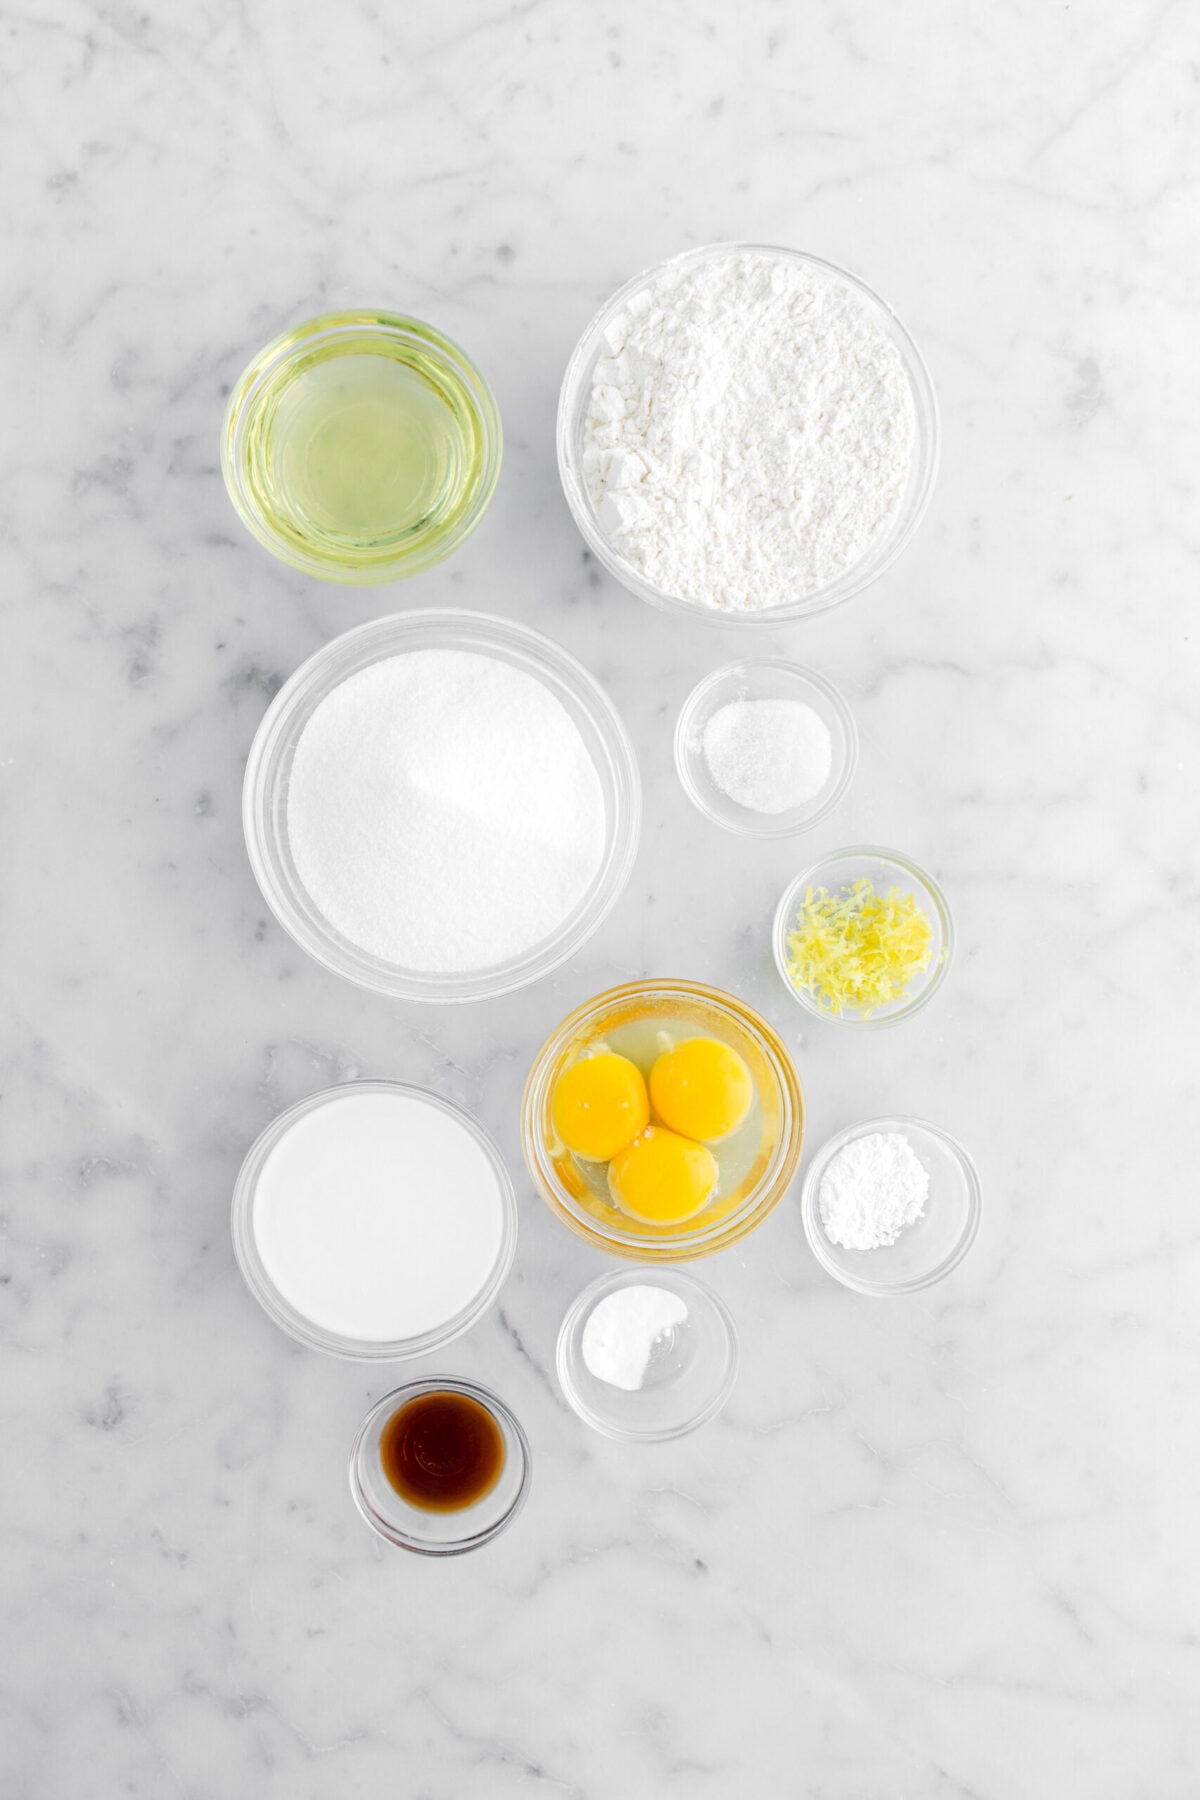 oil, flour, sugar, salt. lemon zest, eggs, baking powder, baking soda, milk, and vanilla on marble surface.